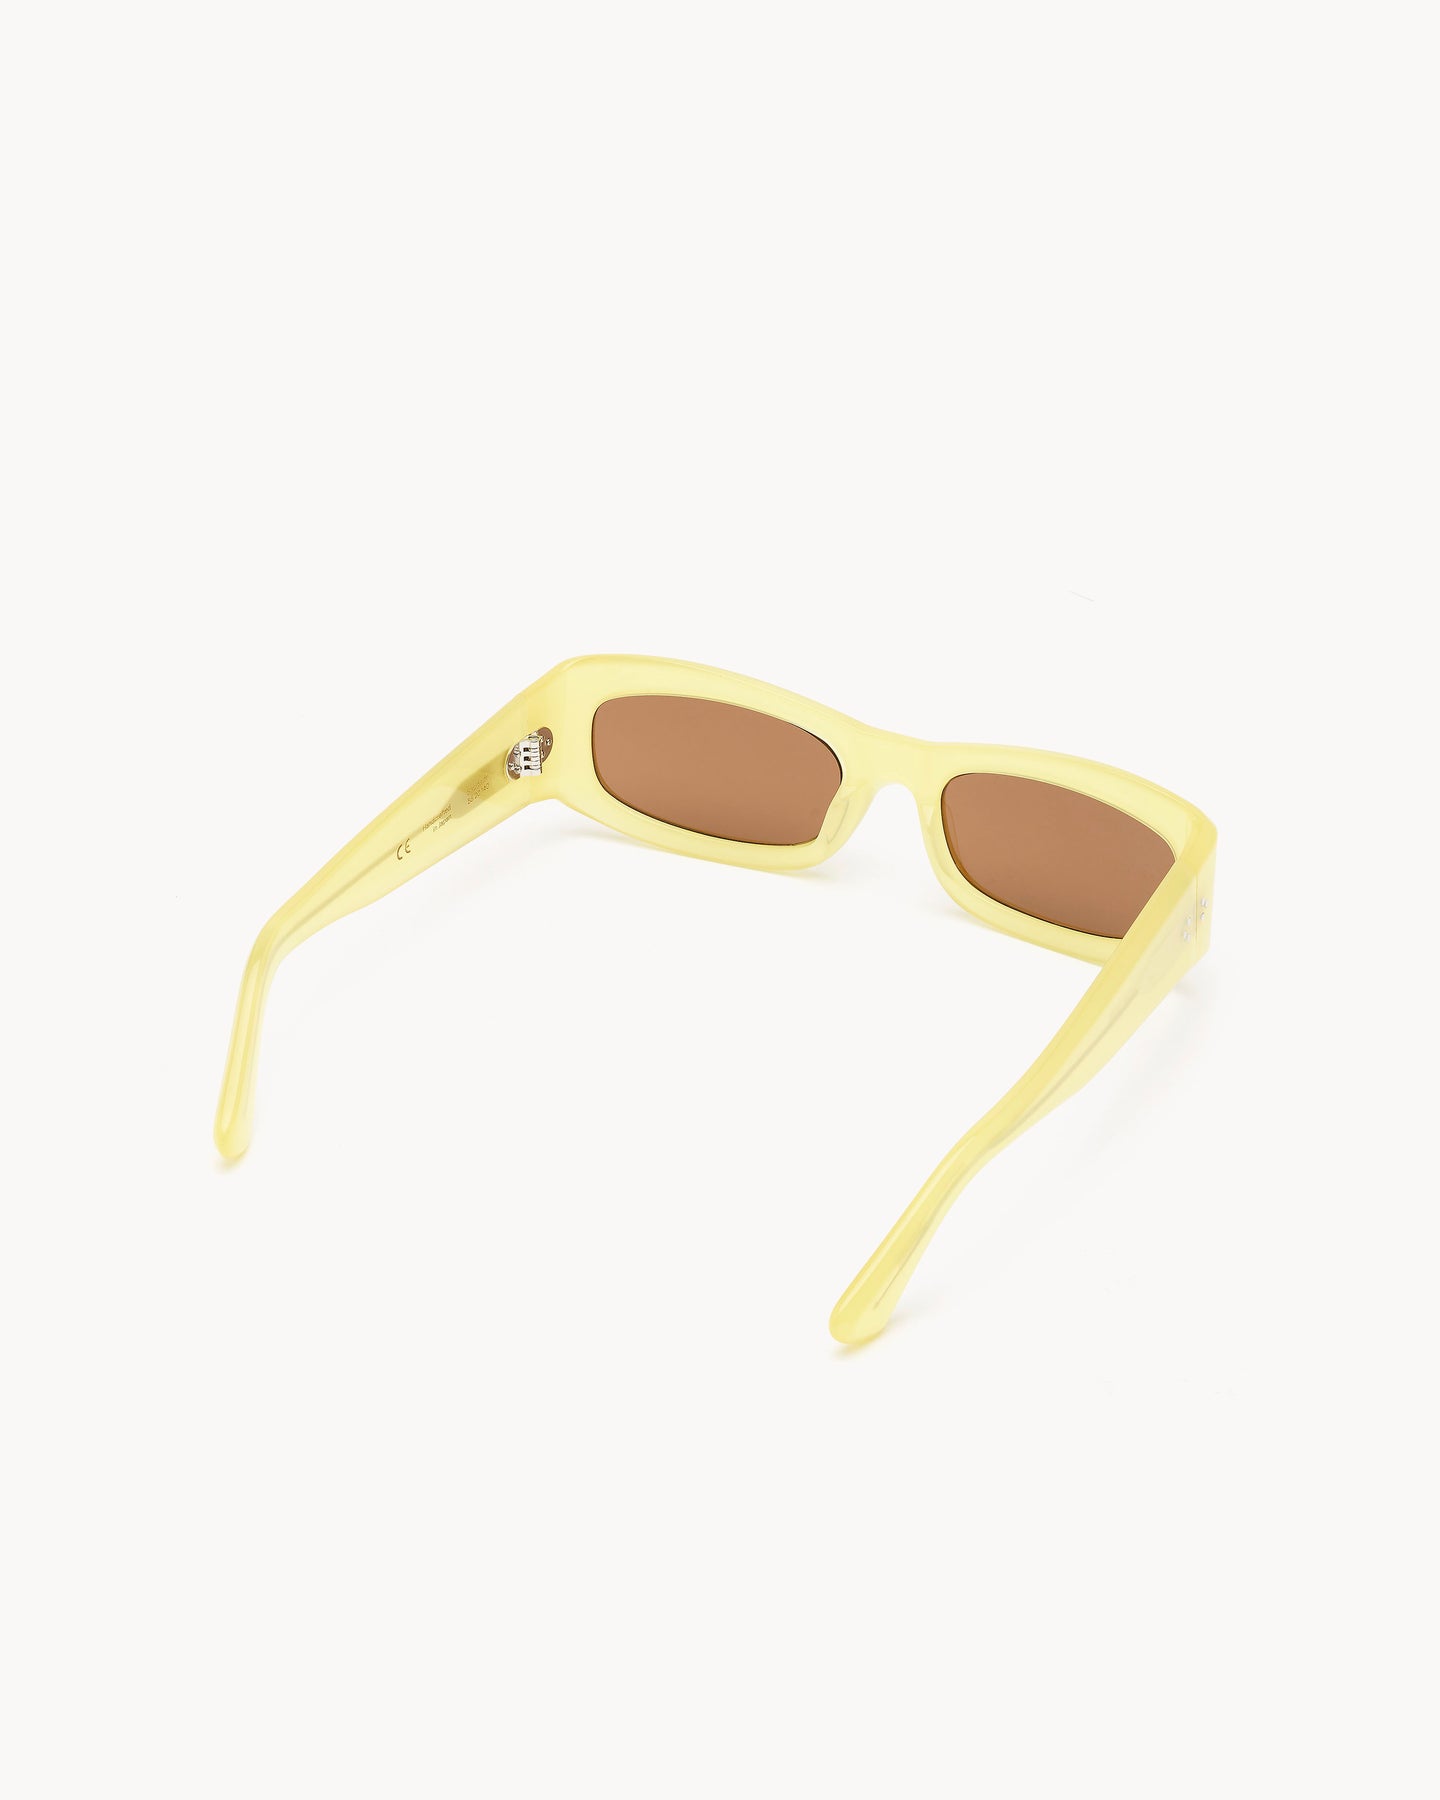 Port Tanger Saudade Sunglasses in Limon Acetate and Tobacco Lenses 3